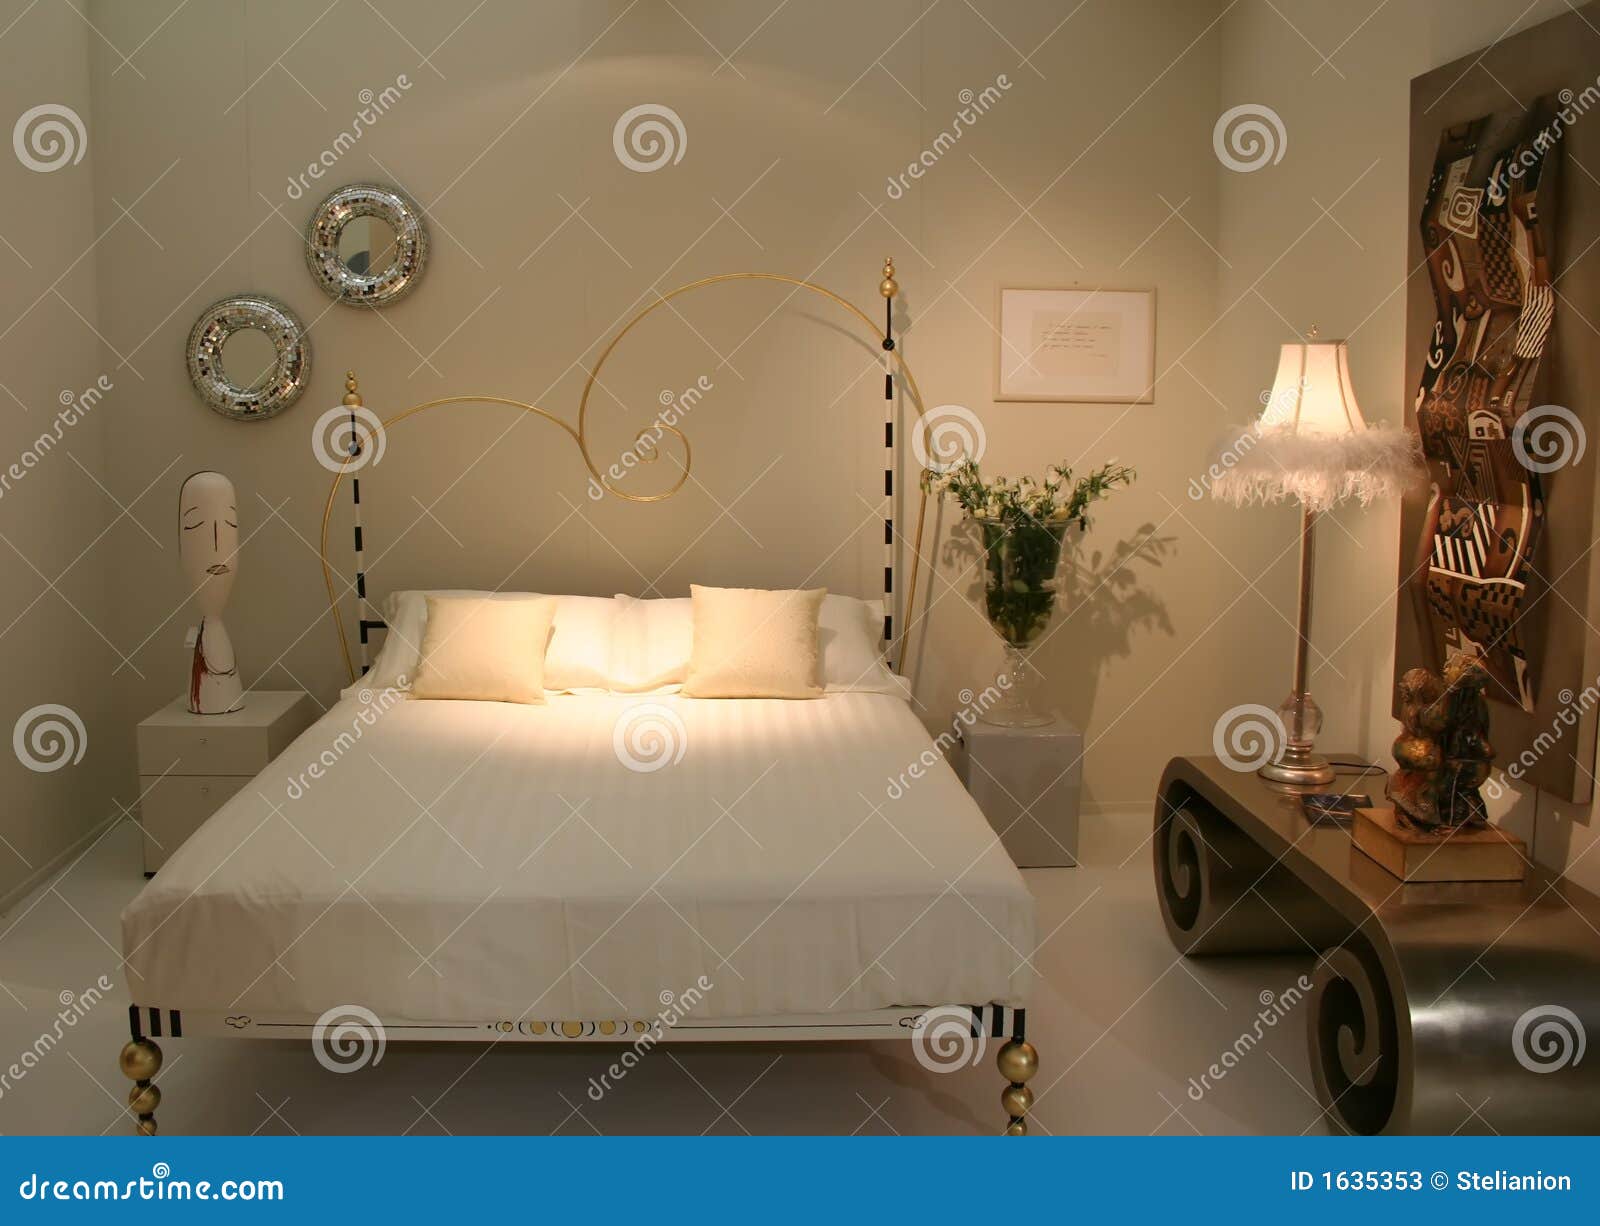 Beedroom Decorating Ideas Stock Image Image Of Bedroom